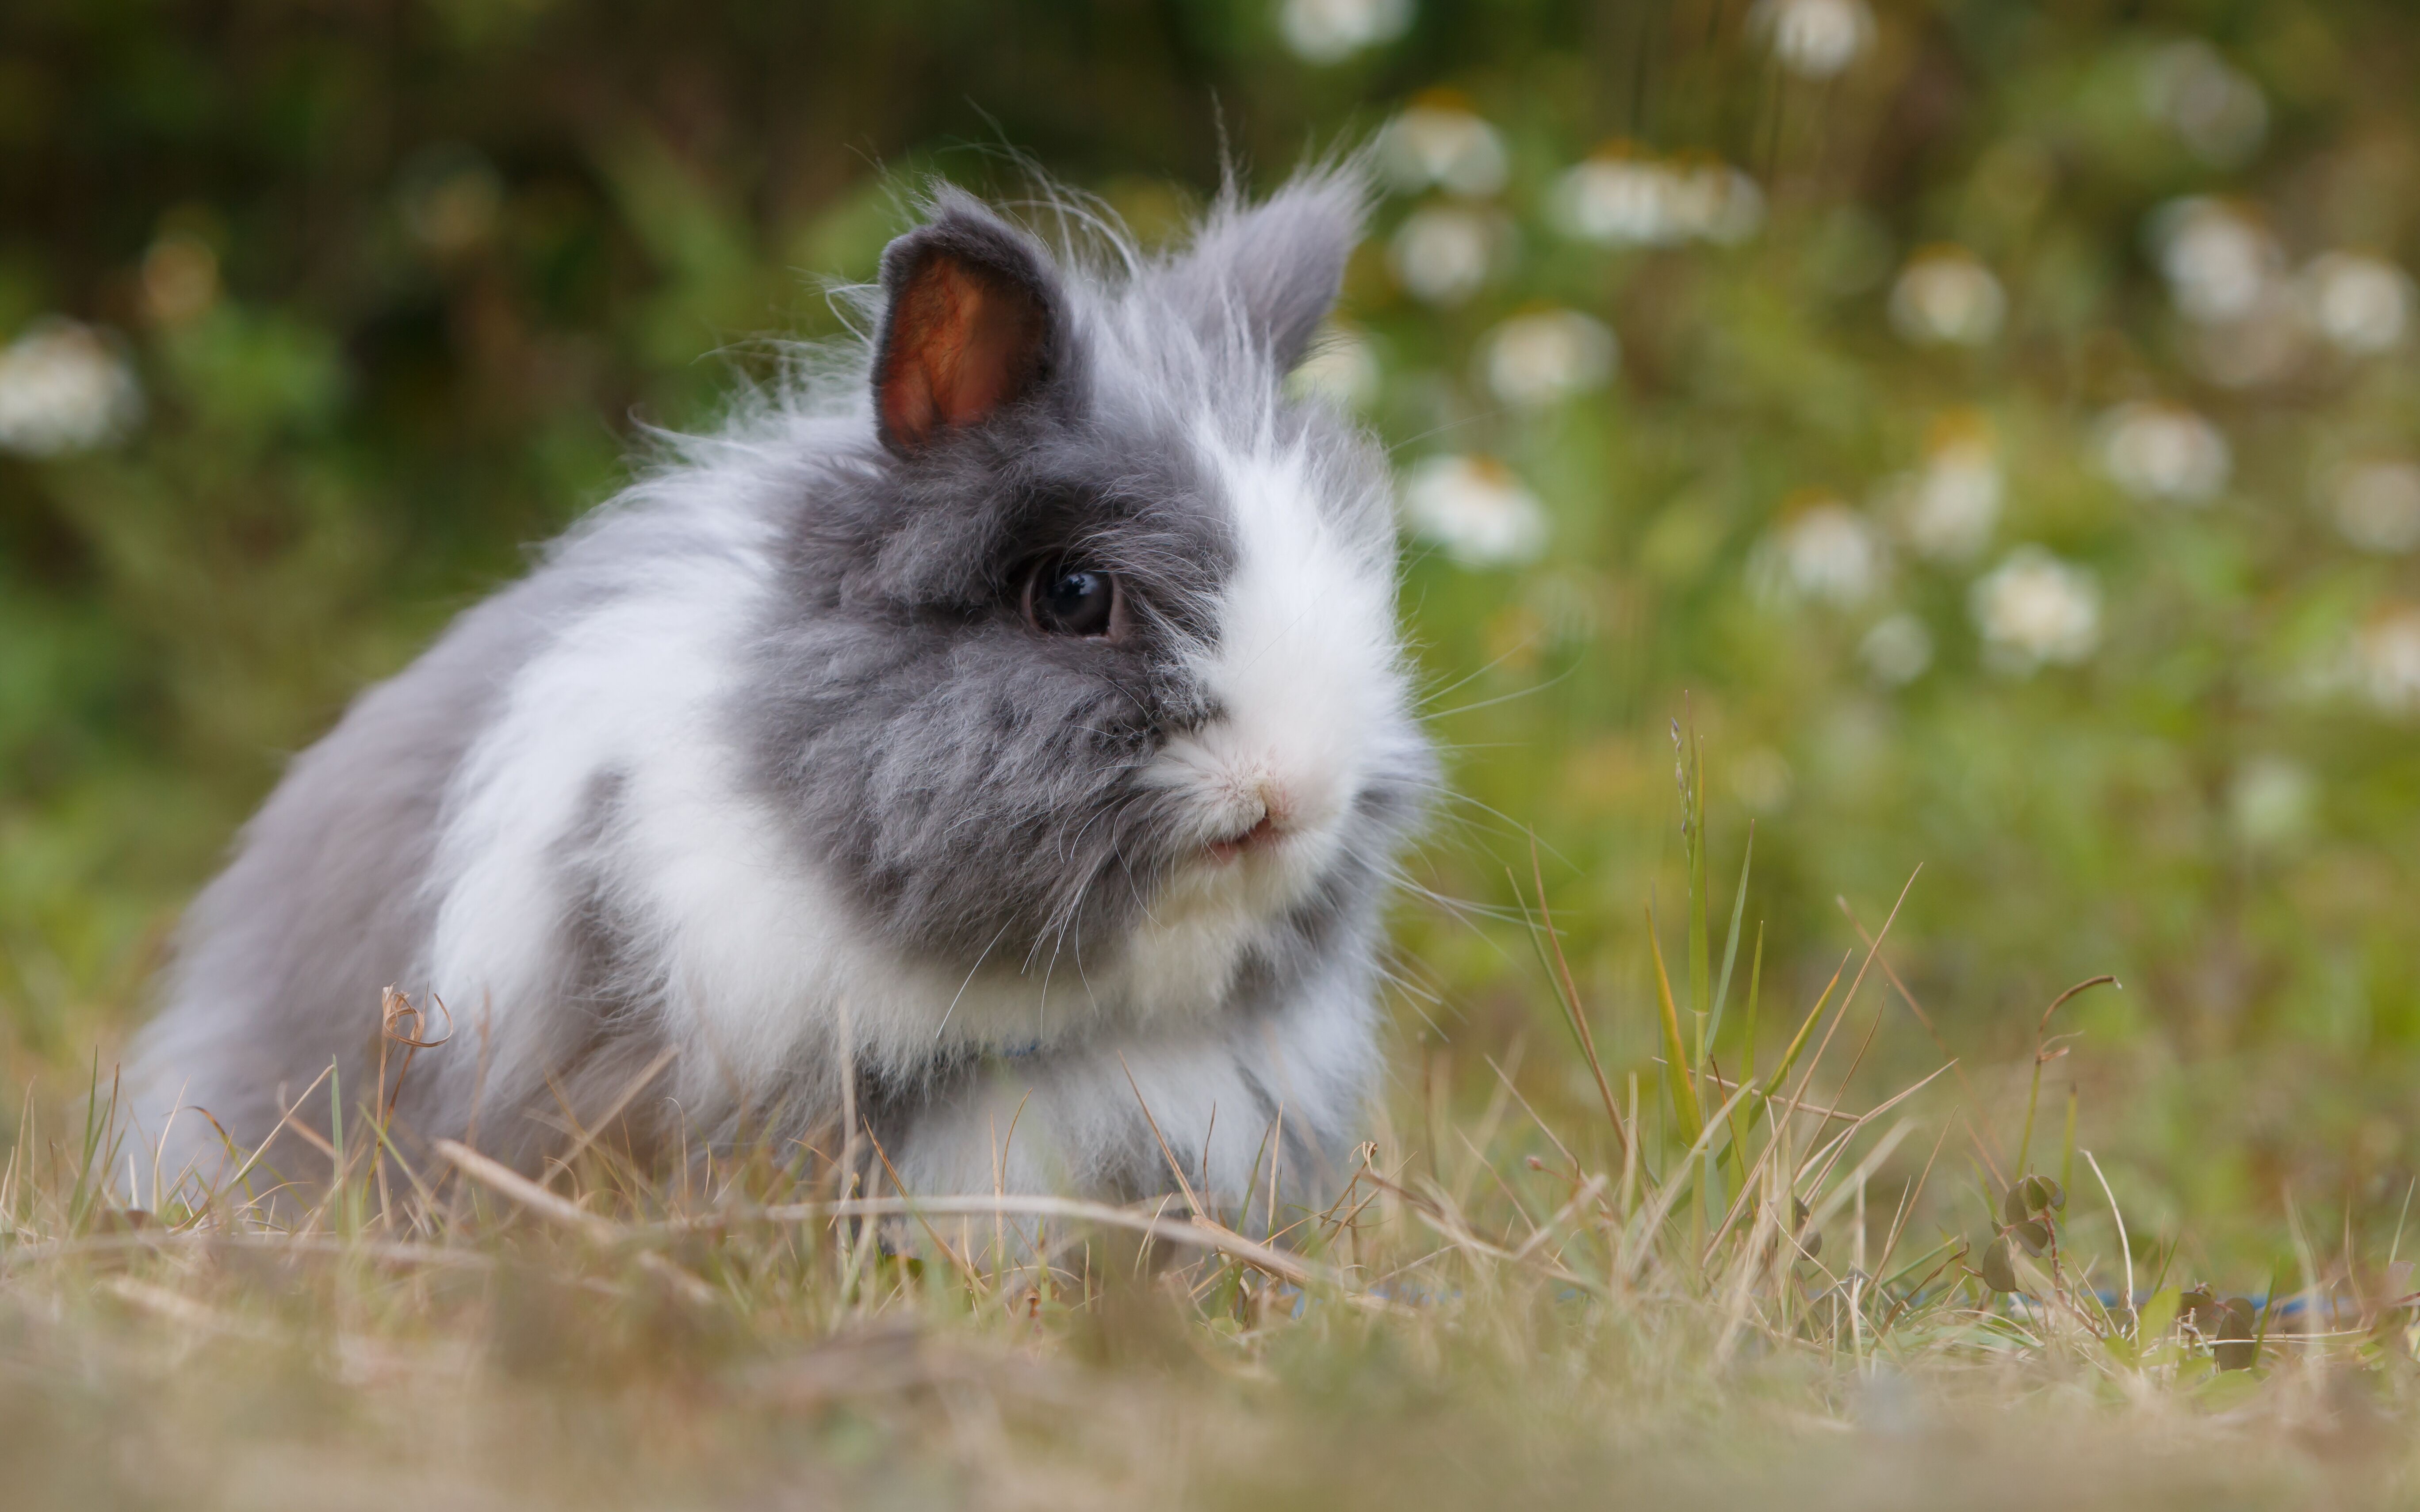 Fluffy wild rabbit in nature